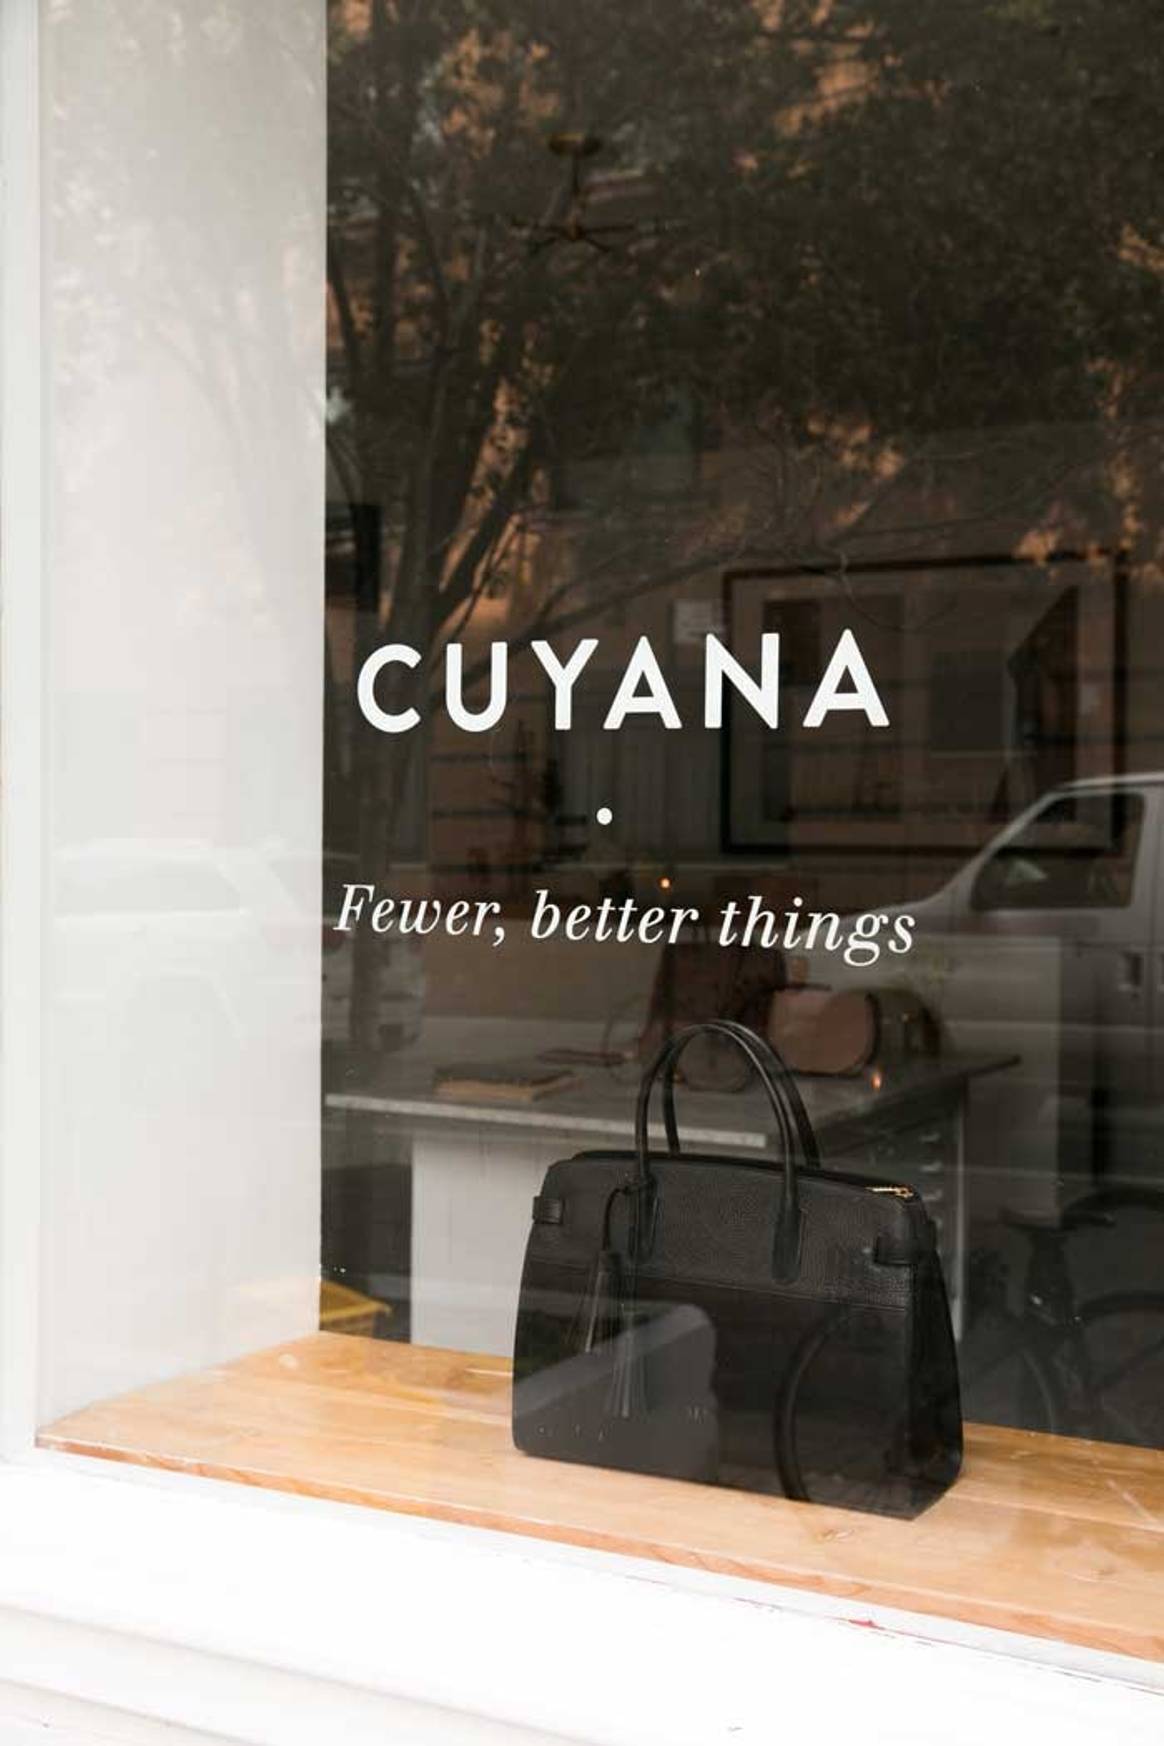 Cuyana's opens New York pop-up